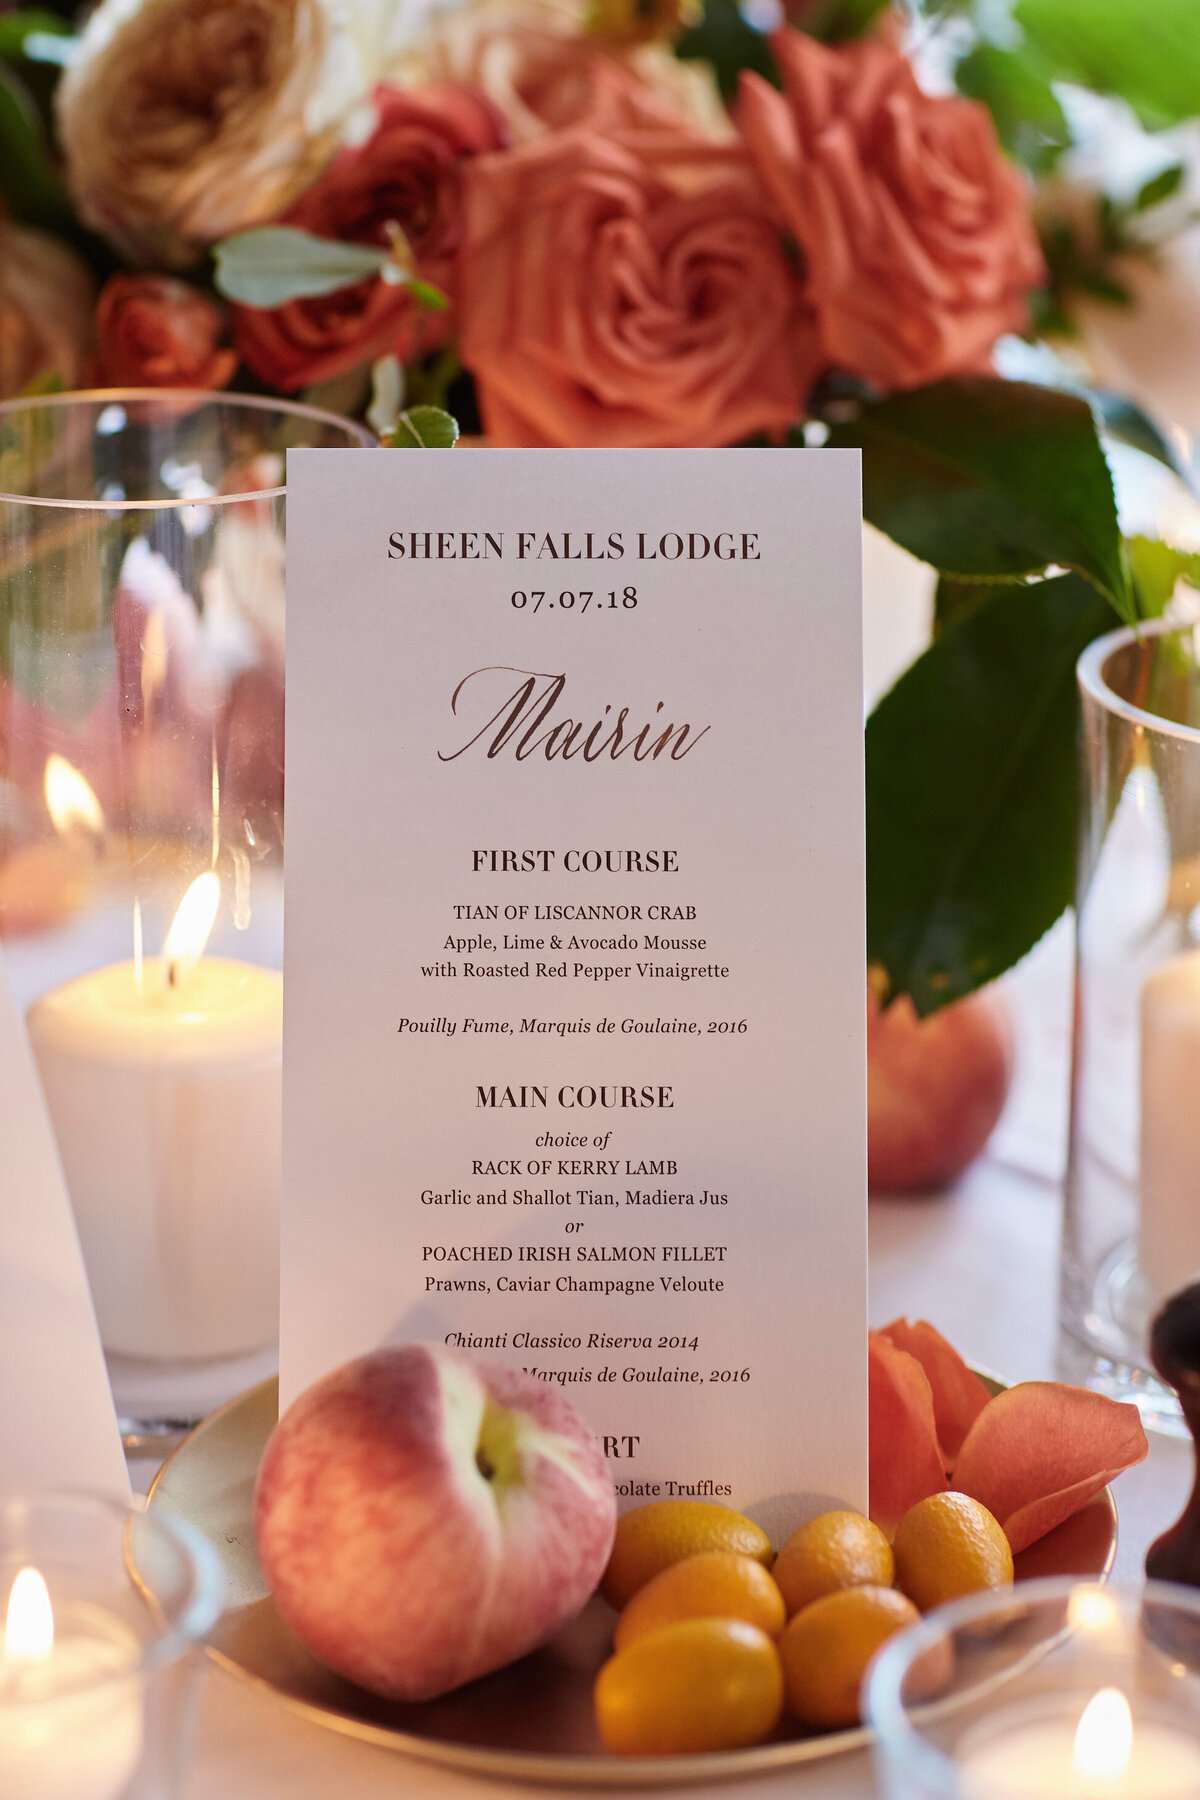 TTWD Wedding Menus Sheen Falls Lodge in Ireland